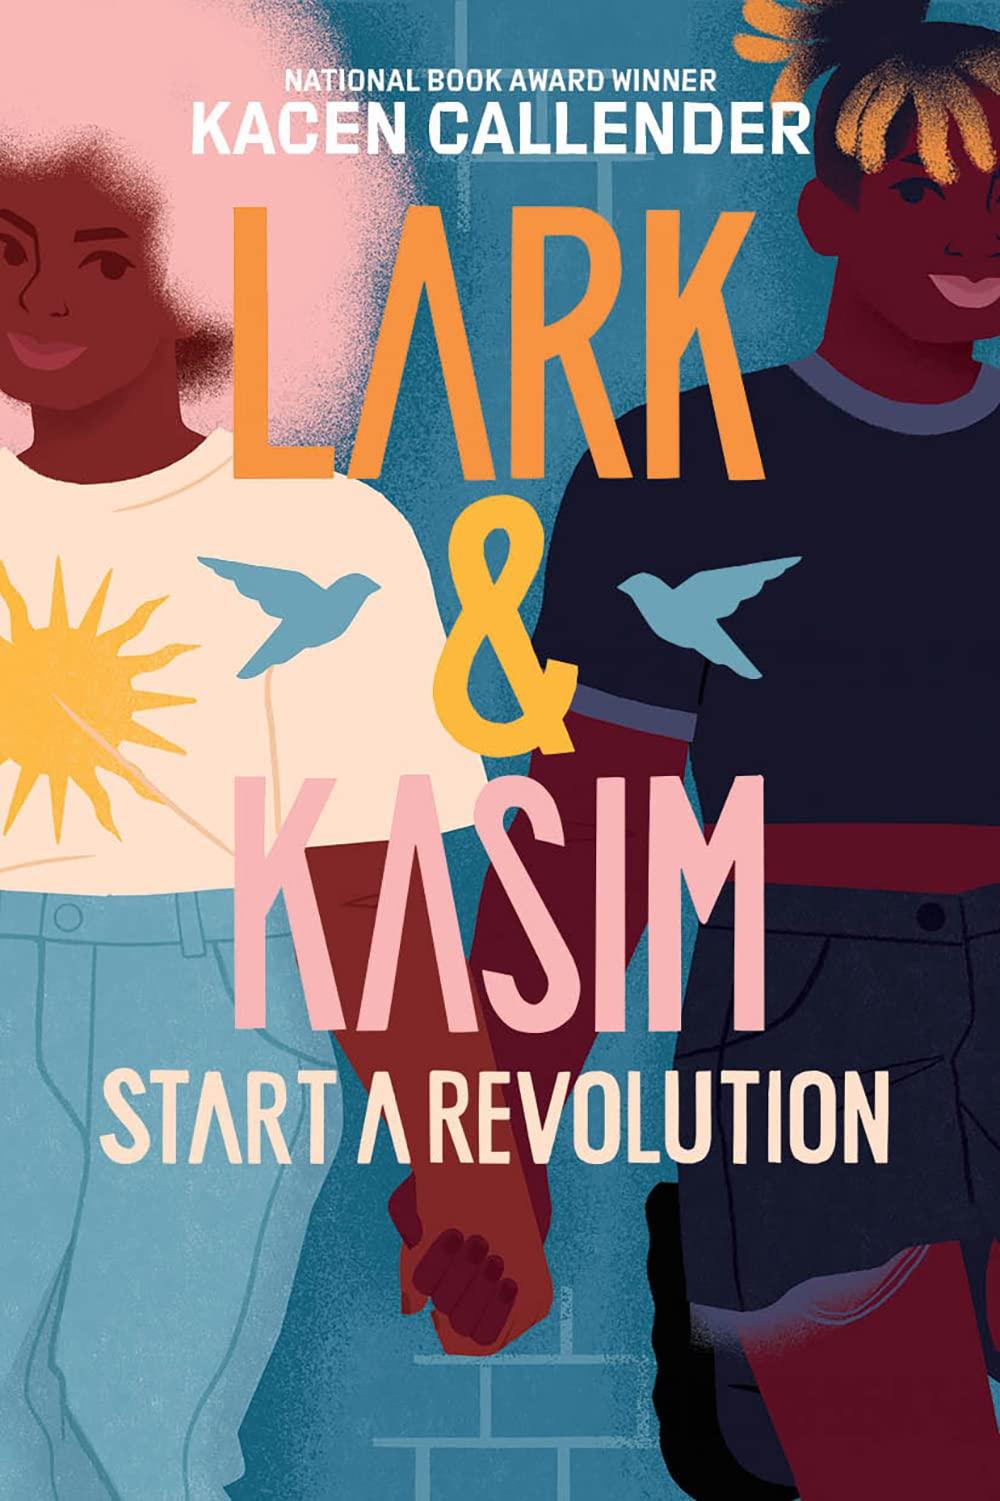 Lark & Kasim Start a Revolution - ShopQueer.co